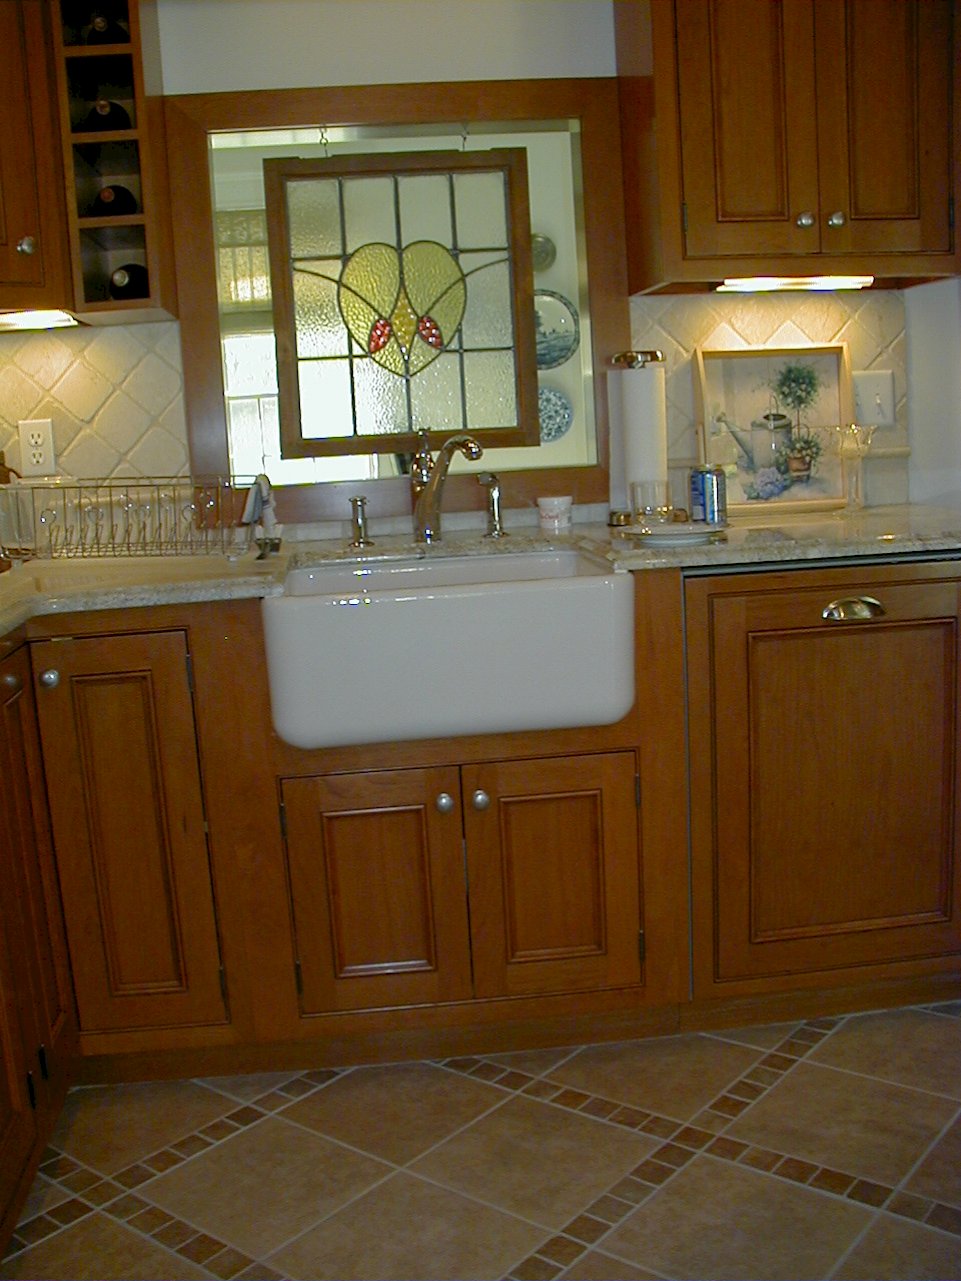 White apron front sink.